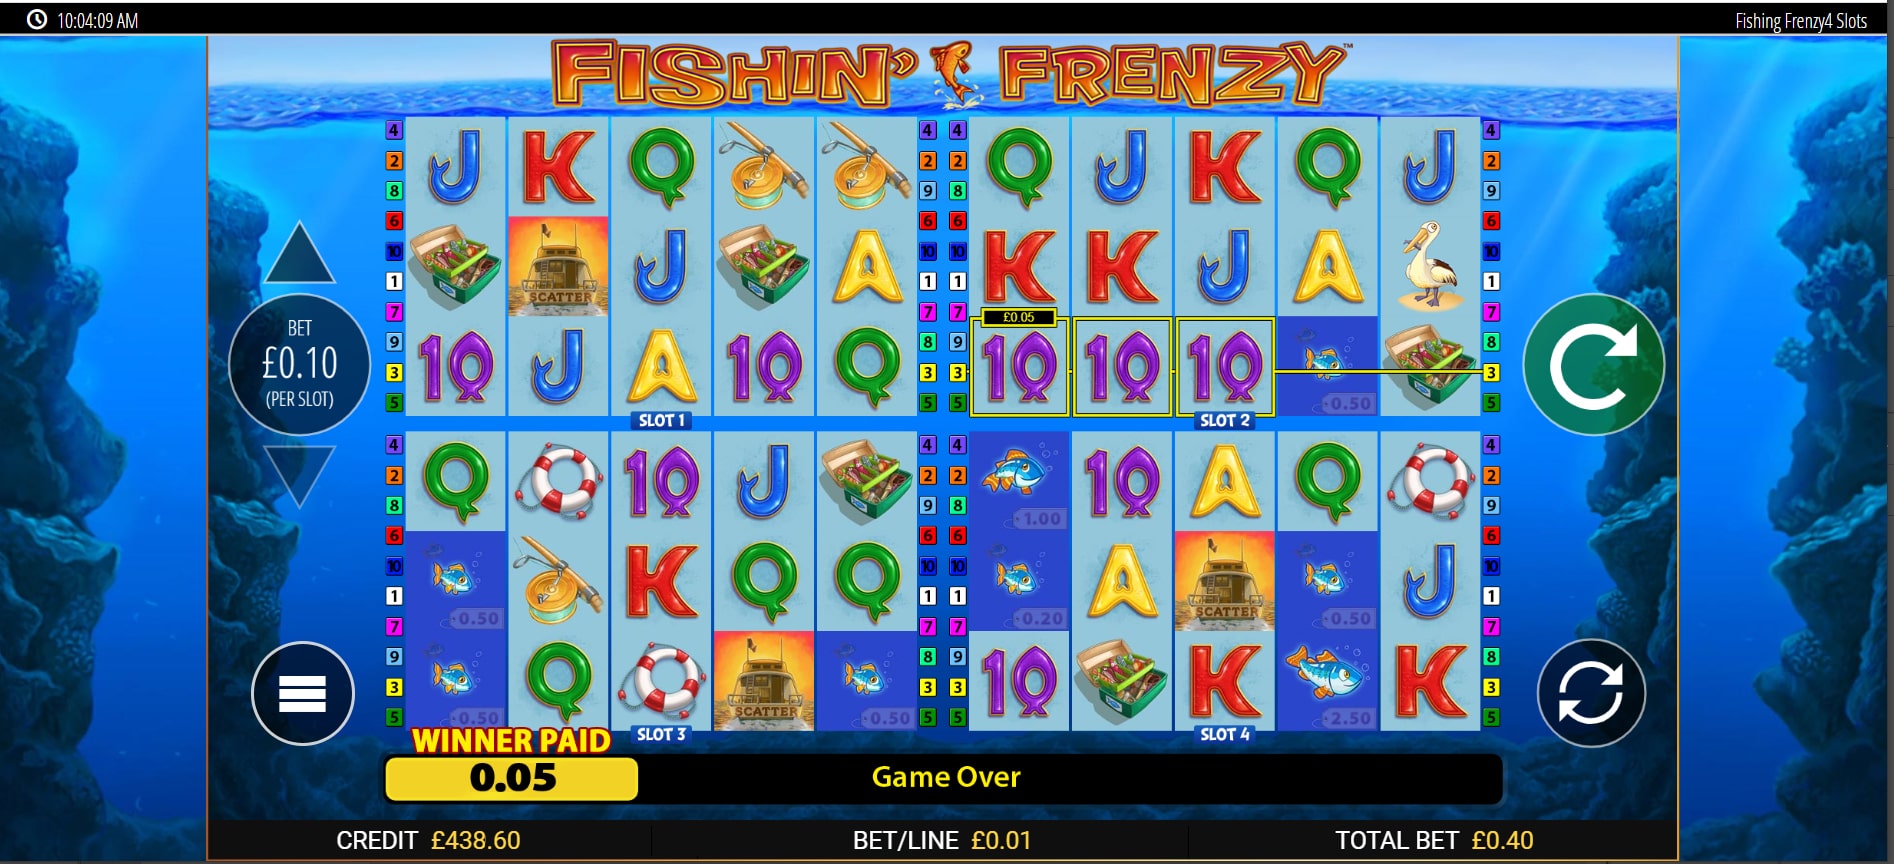 Fishin Frenzy Power 4 Slots Free Spins